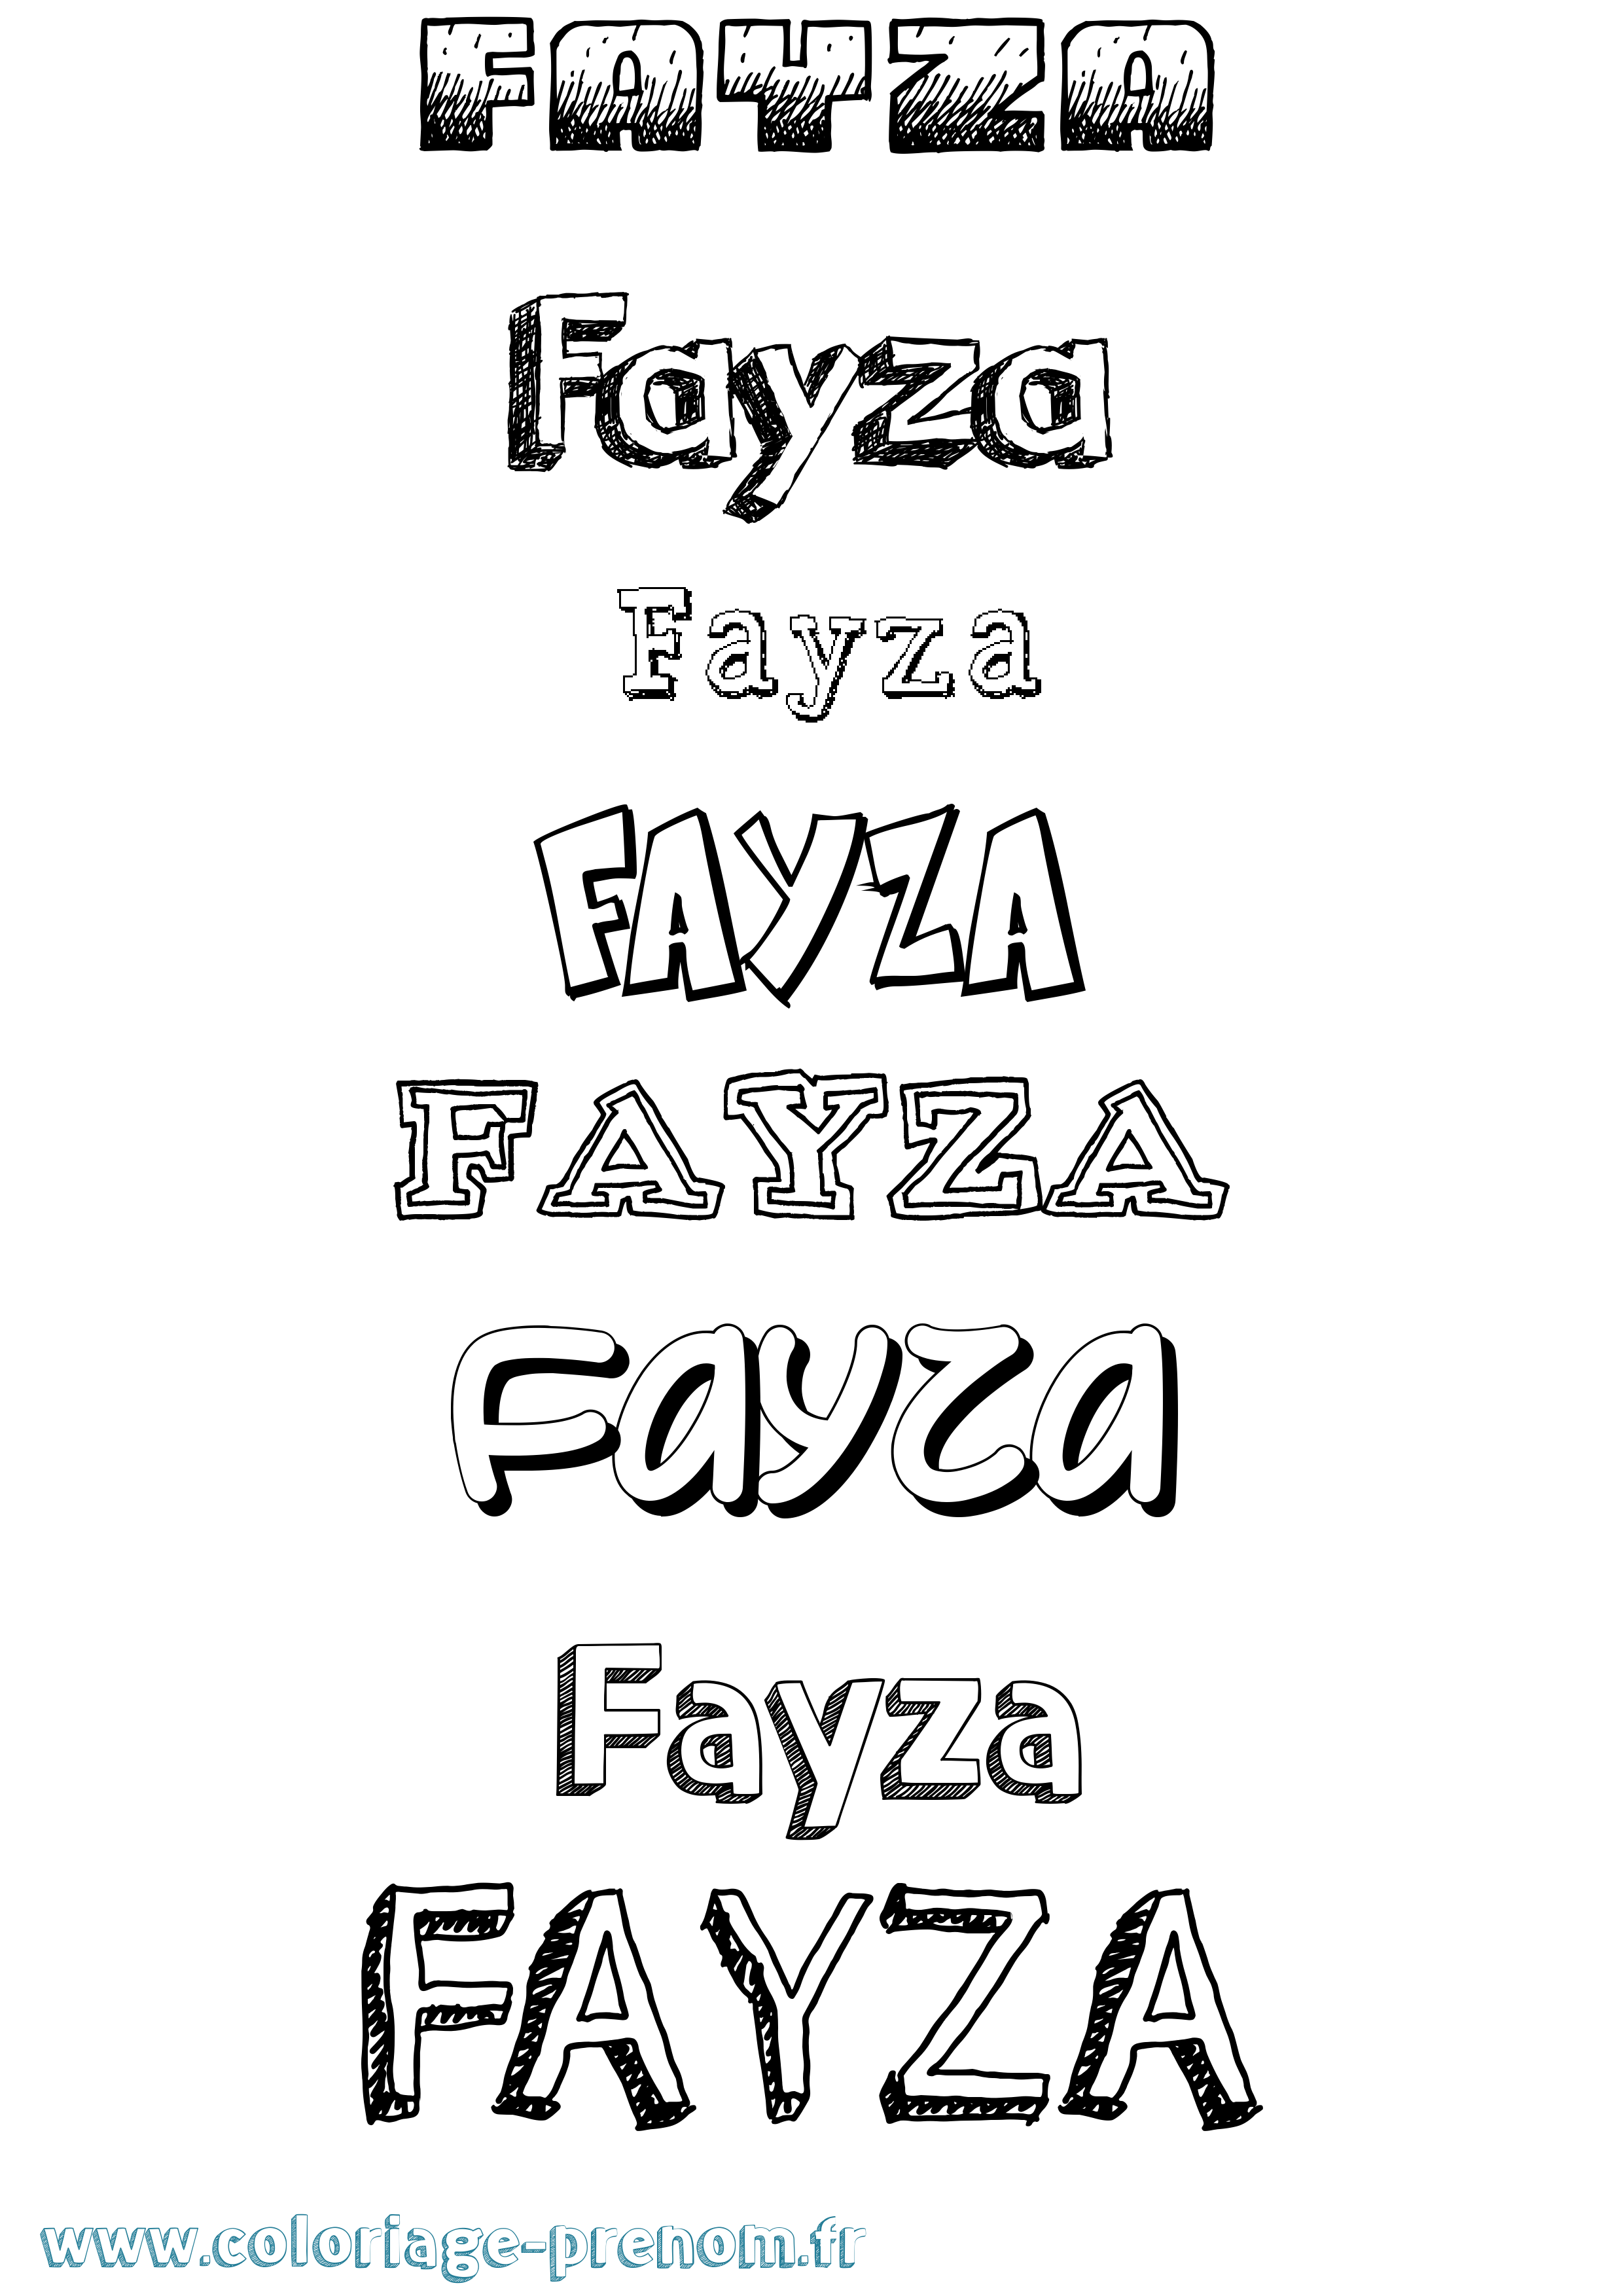 Coloriage prénom Fayza Dessiné